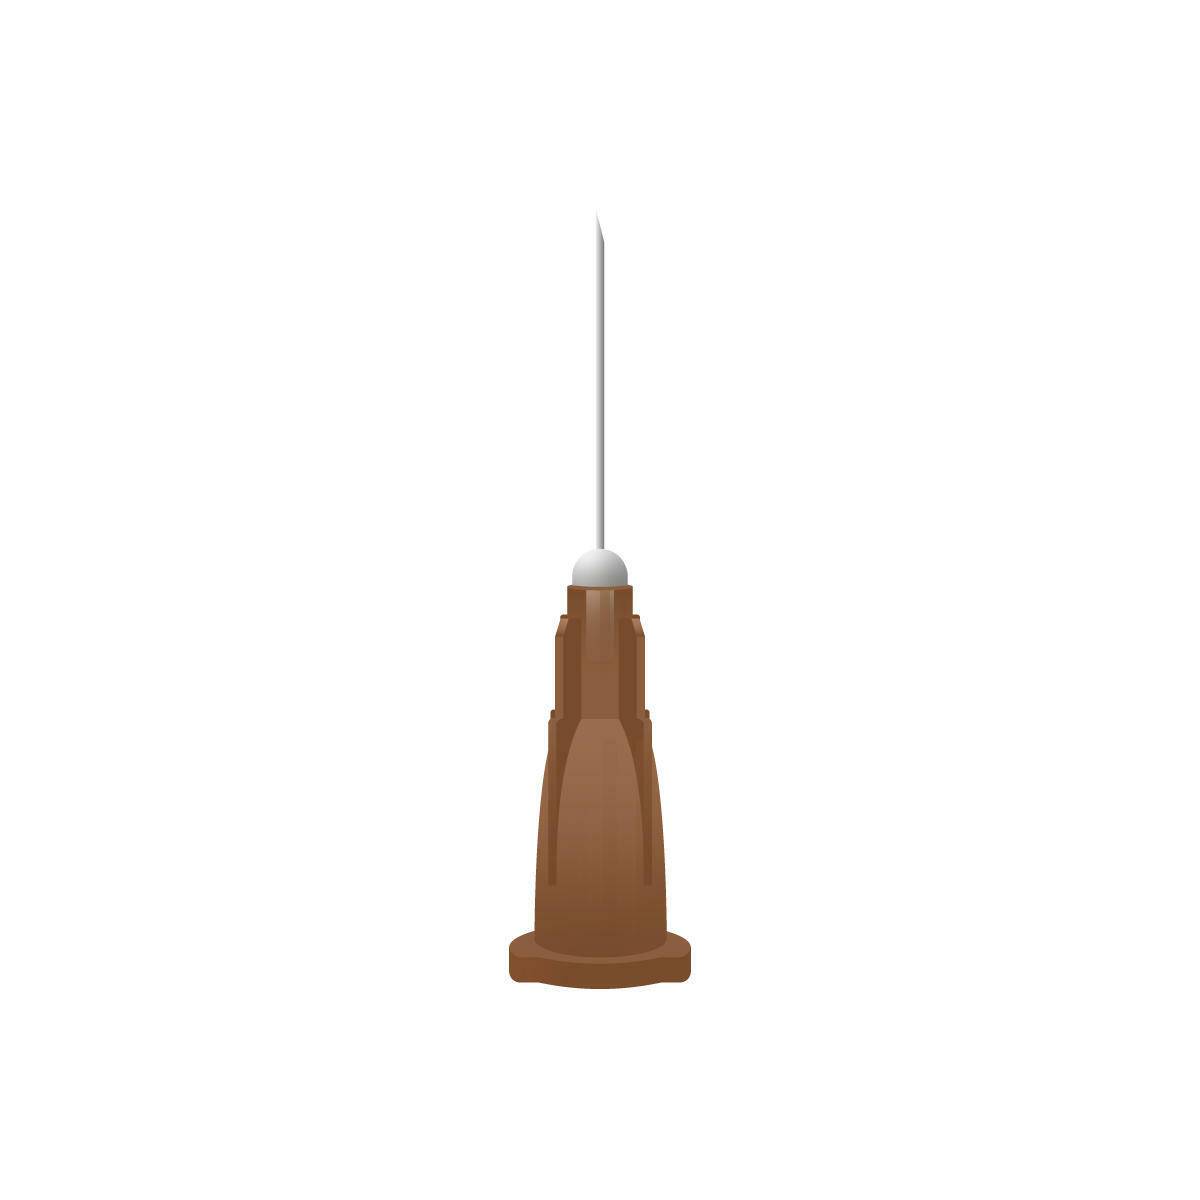 26g Brown 5/8 inch BD Microlance Needles (16mm x 0.45mm) - UKMEDI